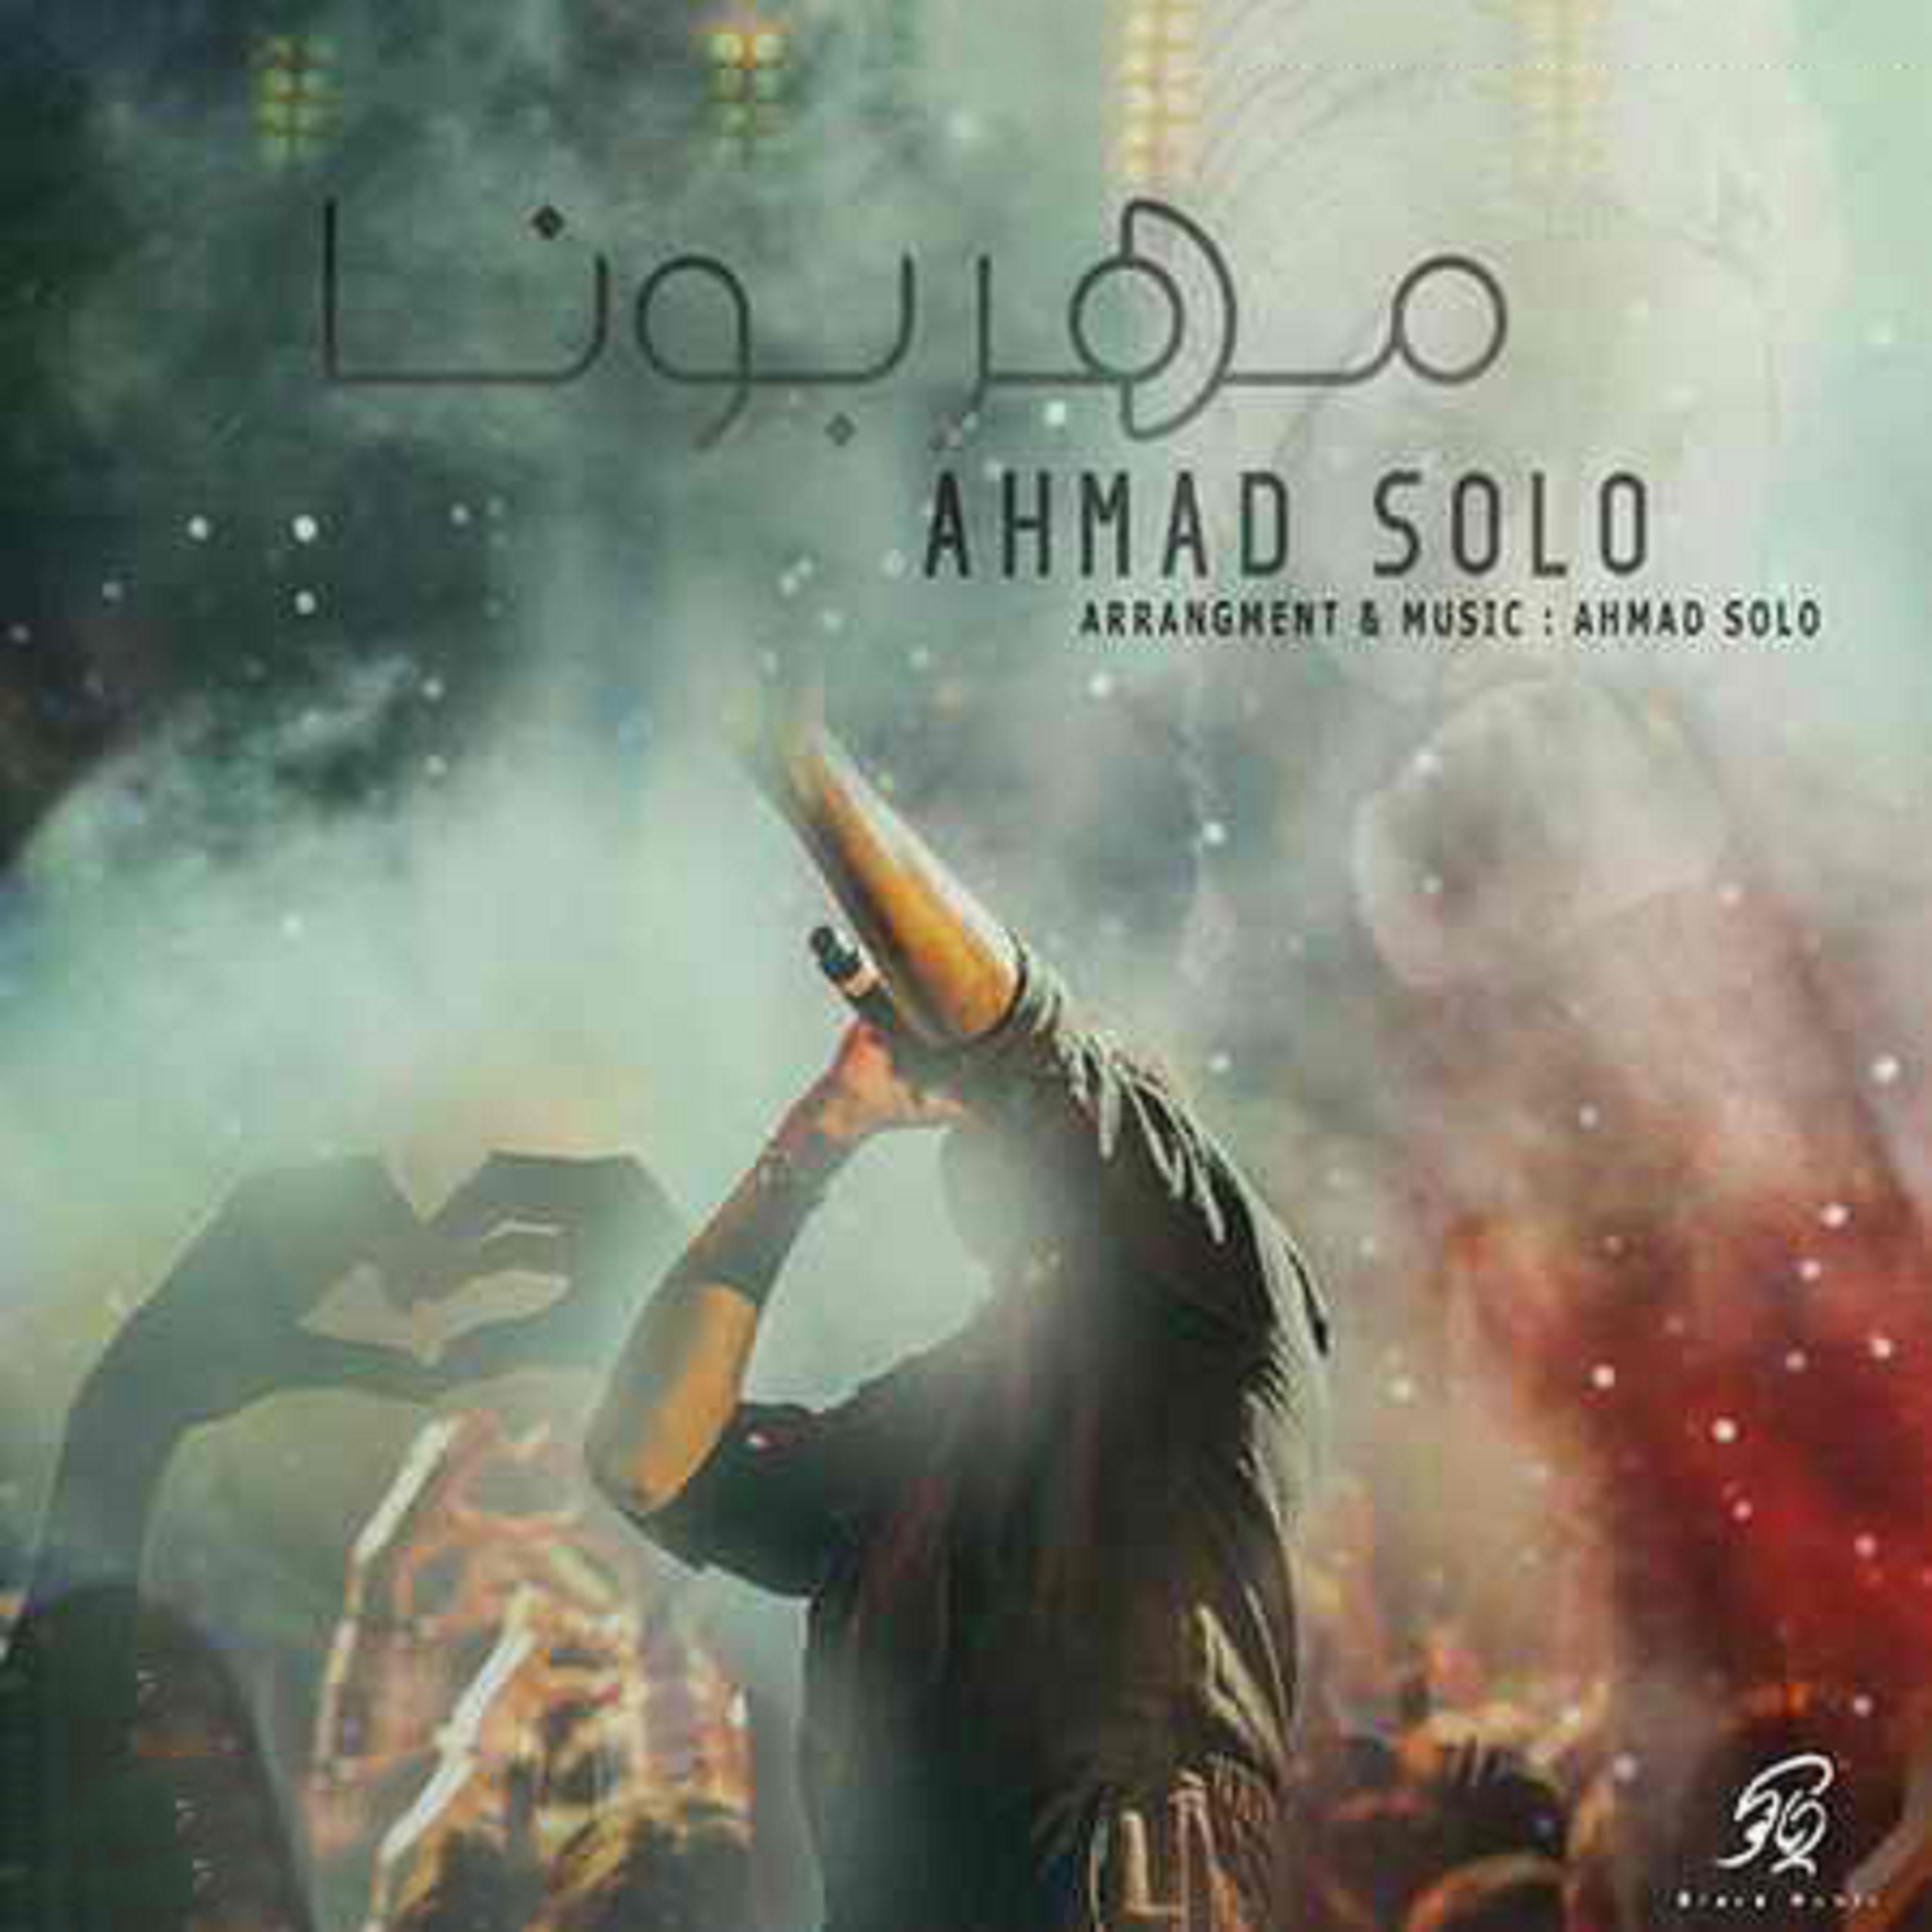  دانلود آهنگ جدید احمد سلو - مهربونا | Download New Music By Ahmad Solo - Mehraboona